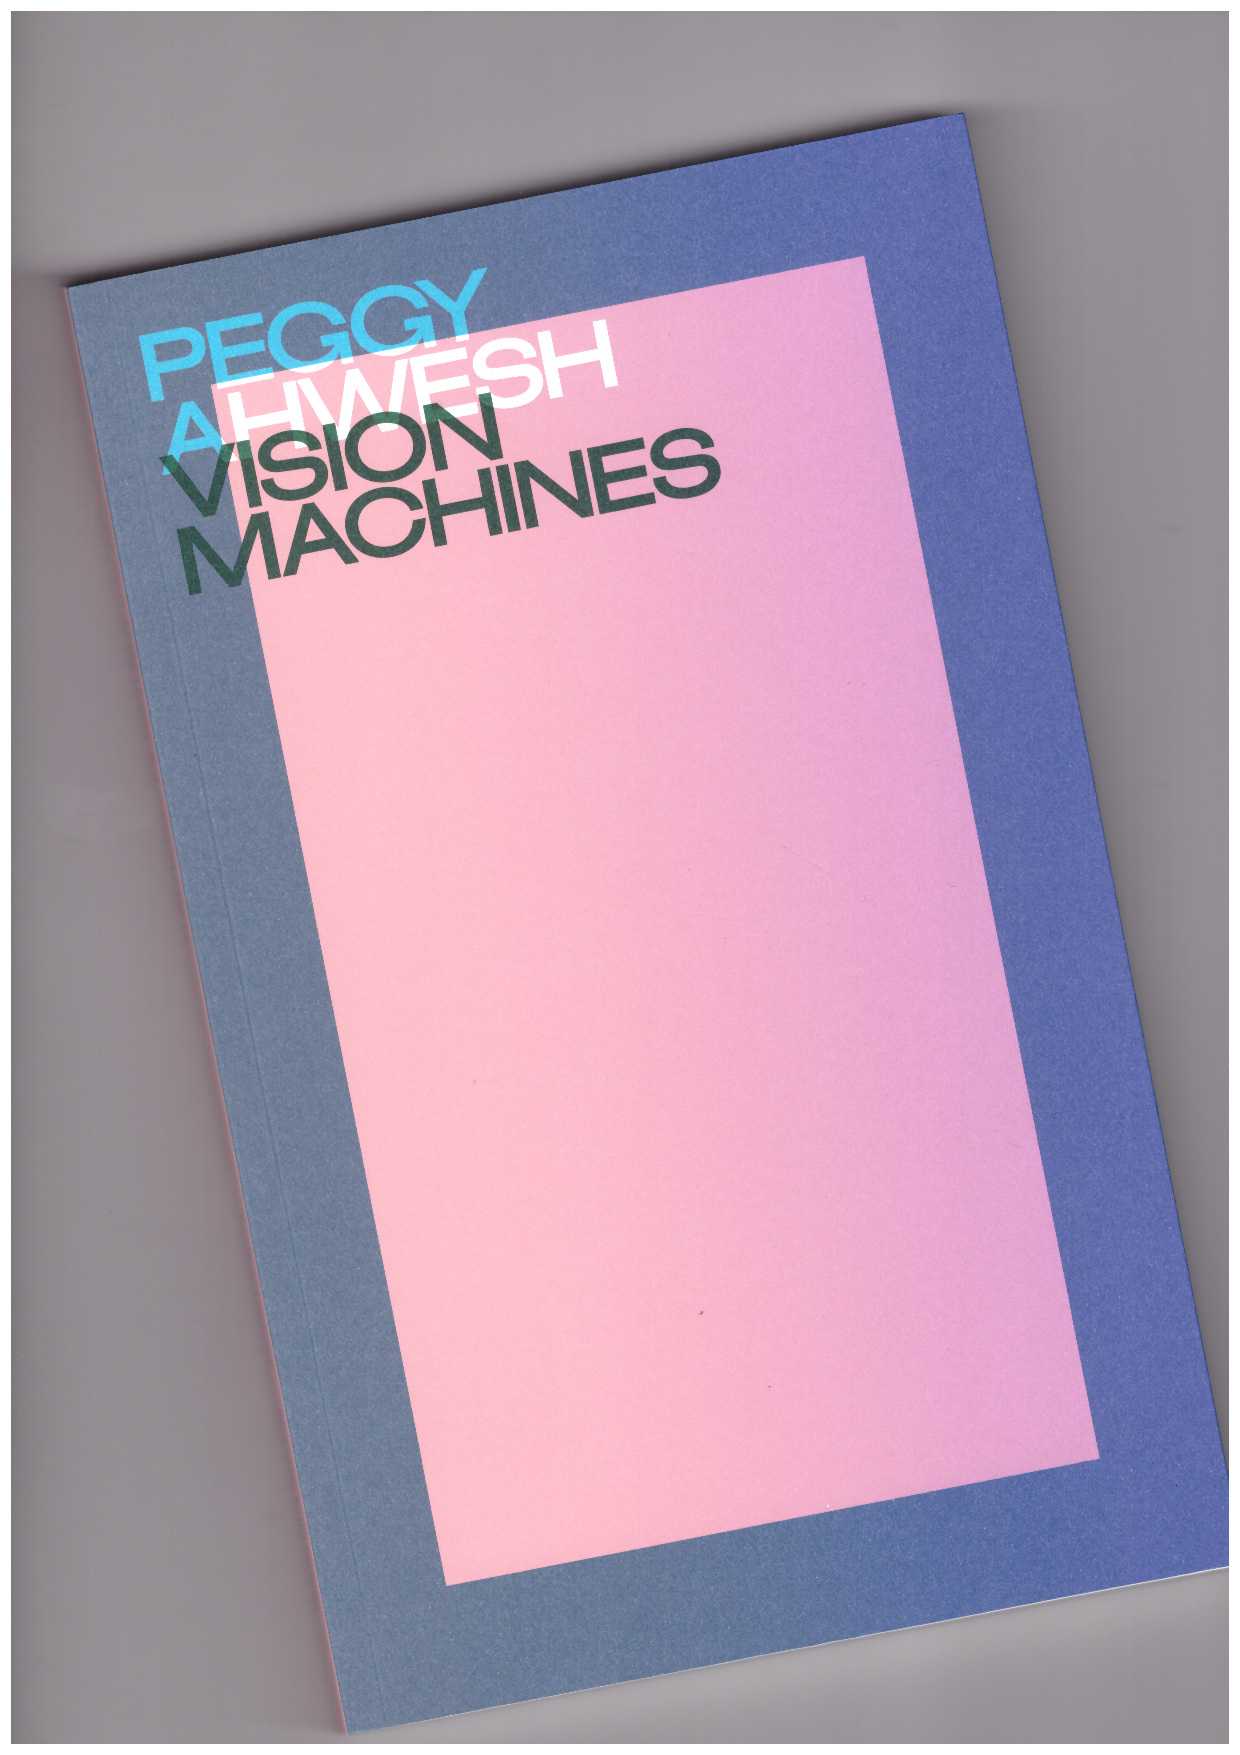 AHWESH, Peggy; BALSOM, Erika (ed.); LECKIE, Robert (ed.) - Peggy Ahwesh. Vision Machines